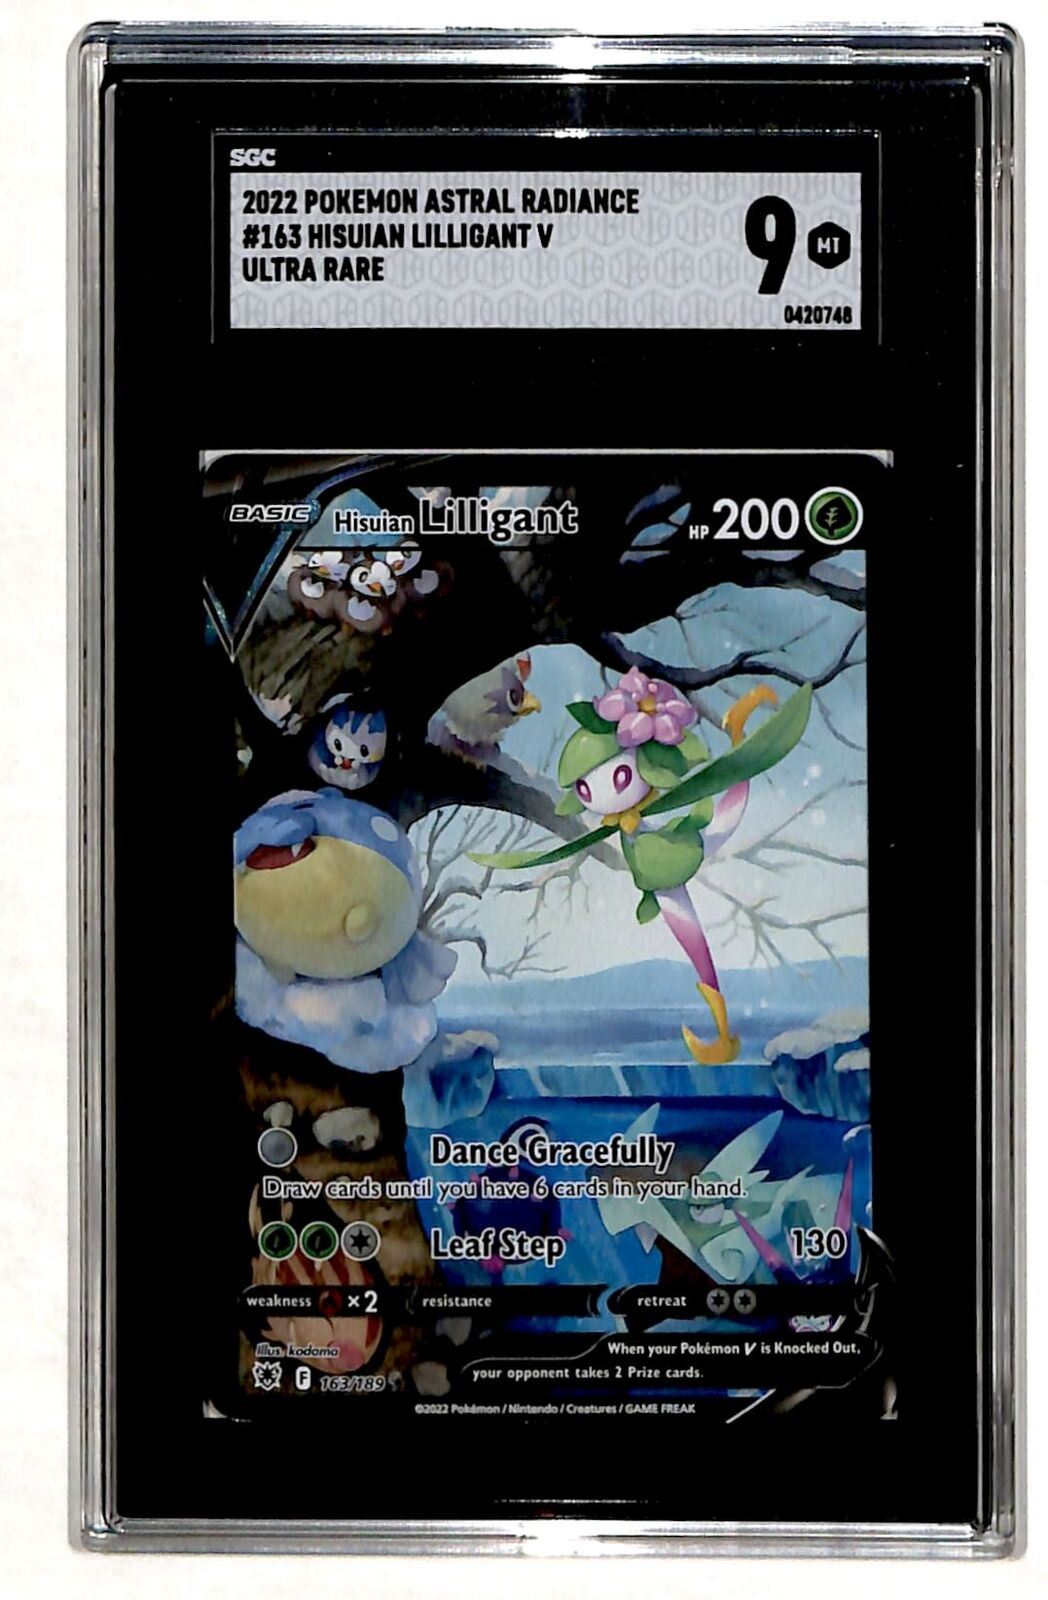 2022 Pokemon Astral Radiance Hisuian Lilligant V #163 SGC 9 Ultra Rare